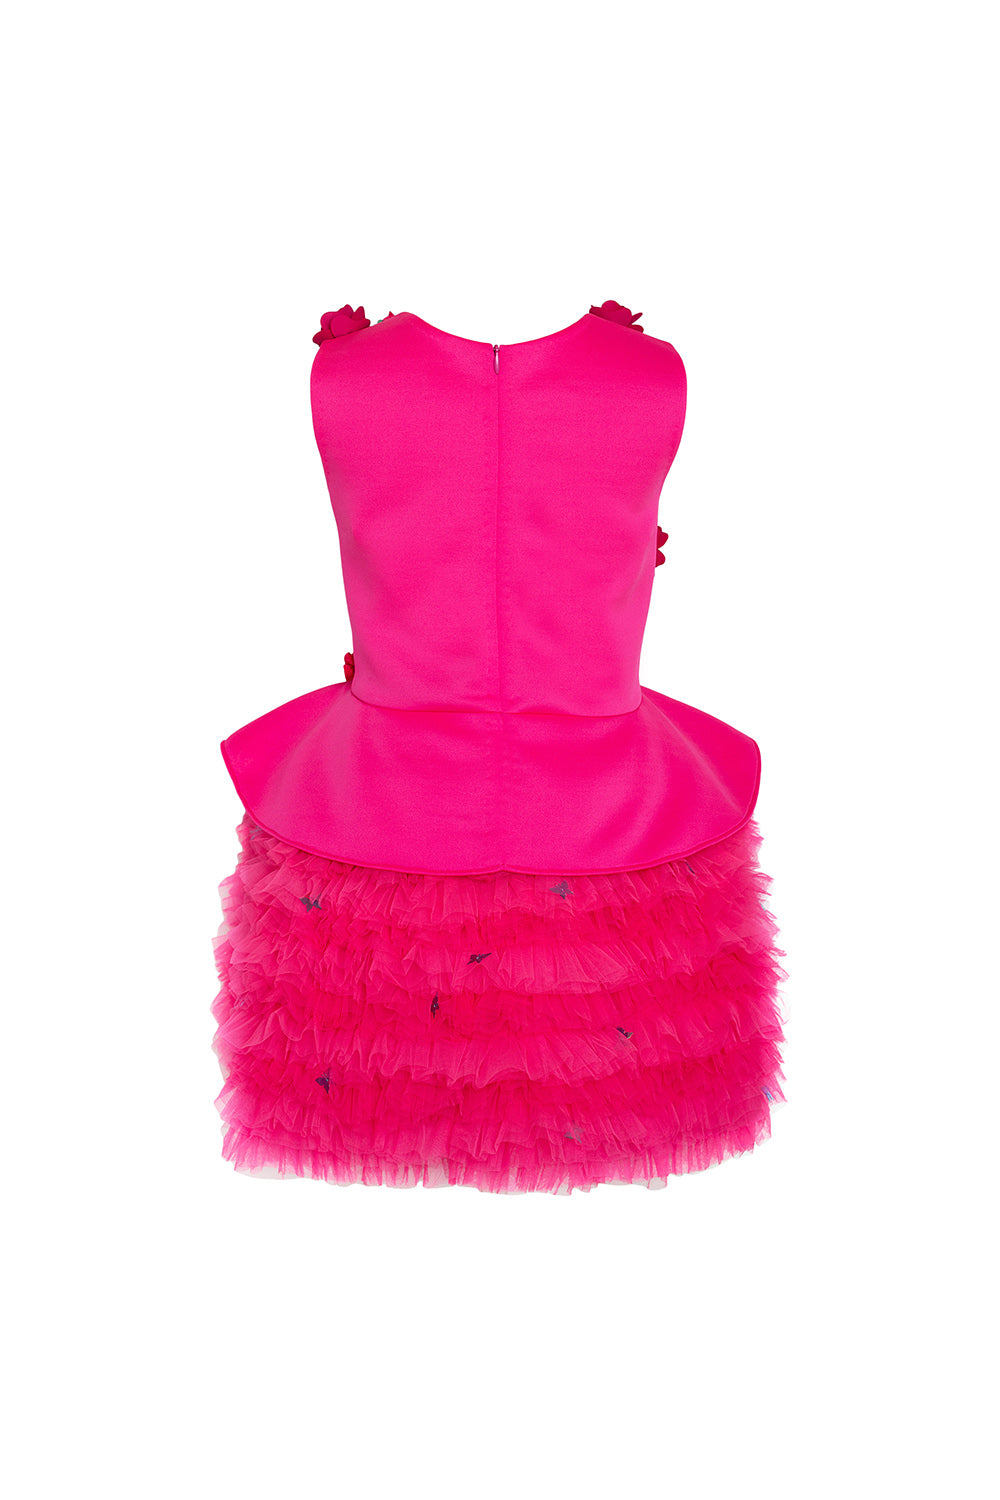 Pink Top And Skirt Set